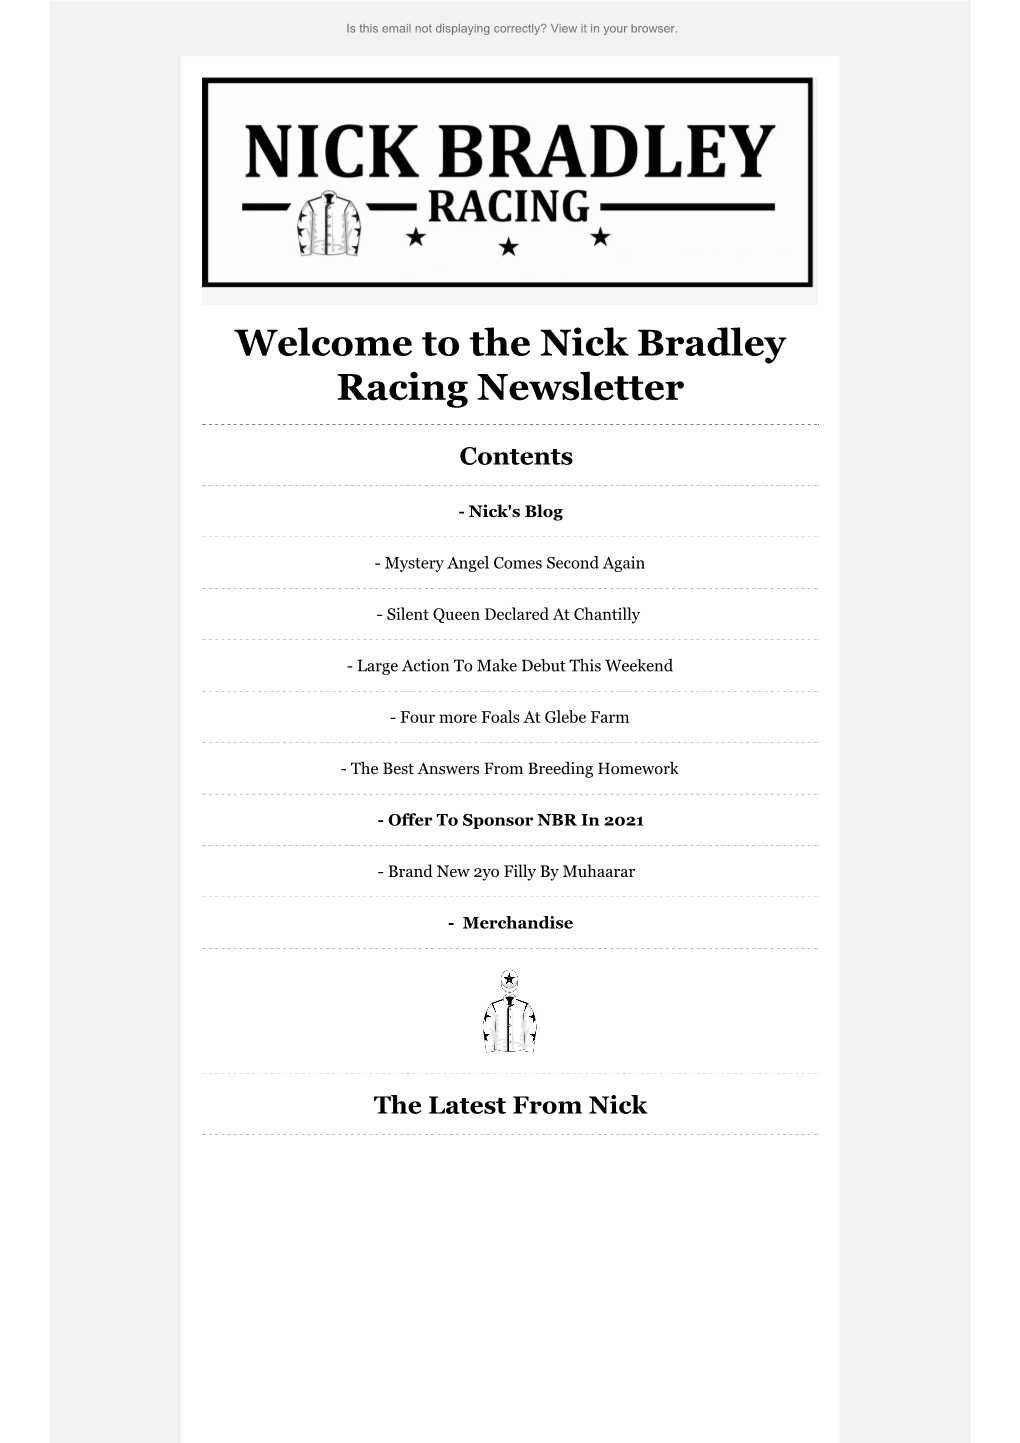 Nick Bradley Racing Newsletter